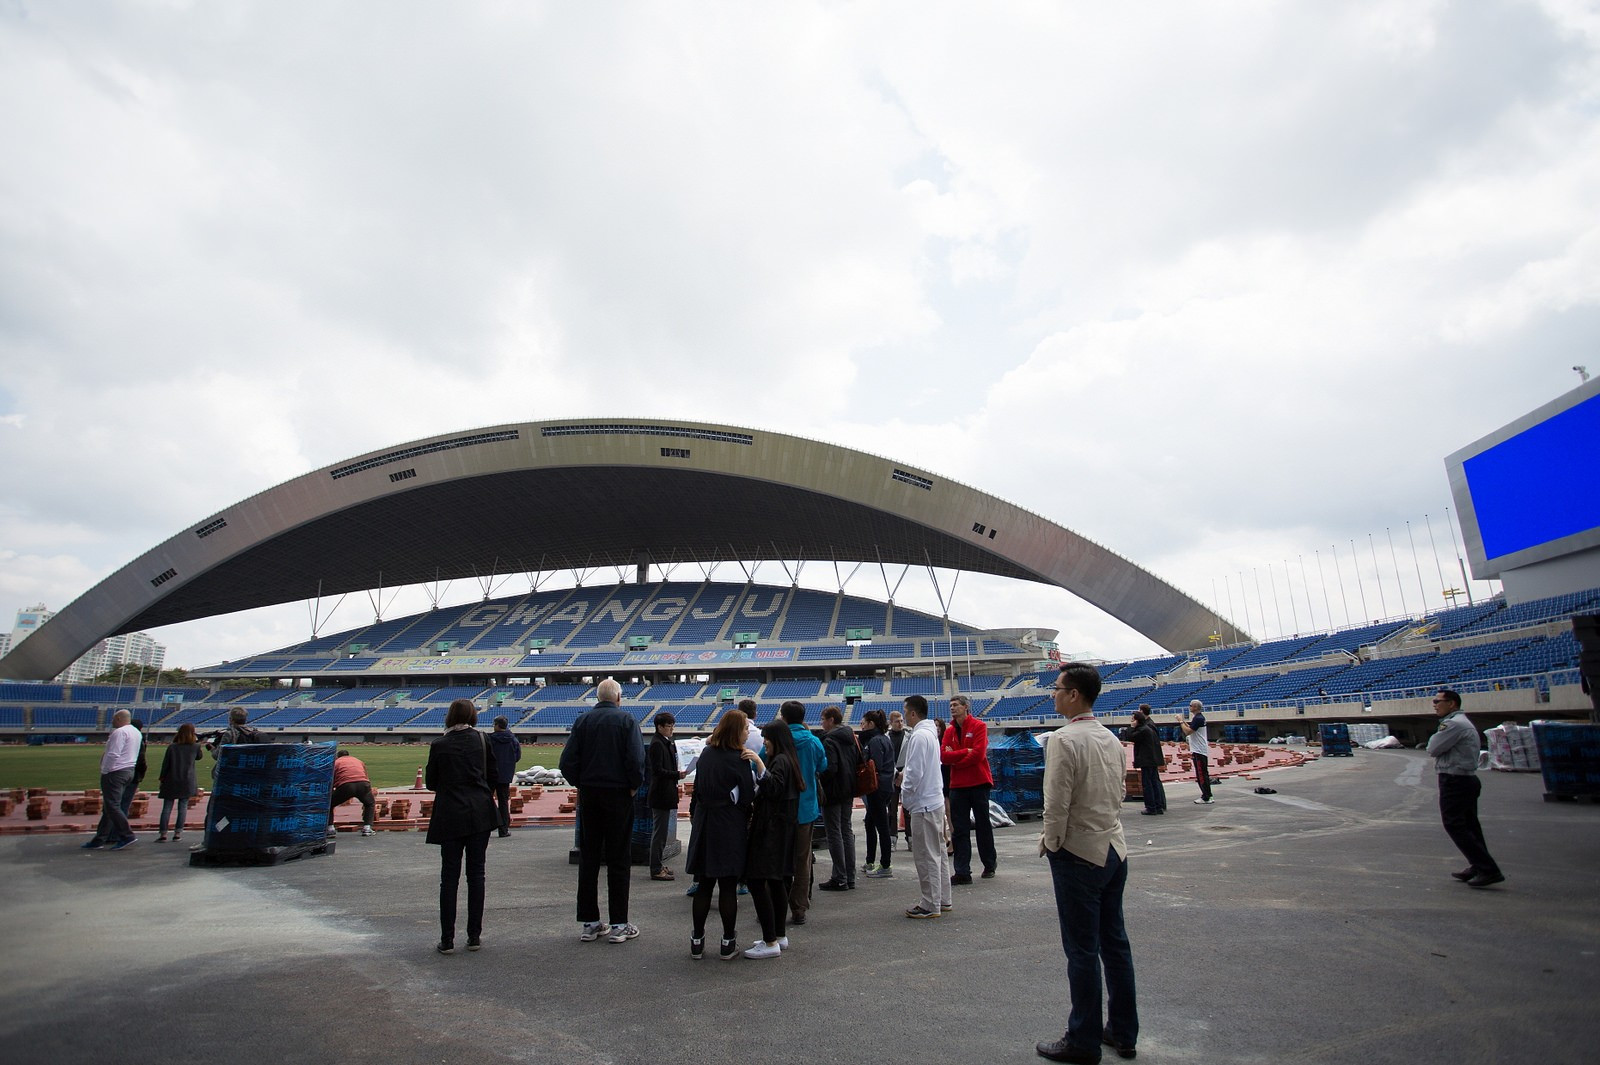 The delegates took in the Gwangju World Cup Stadium as part of the venue tour ©Gwangju 2015